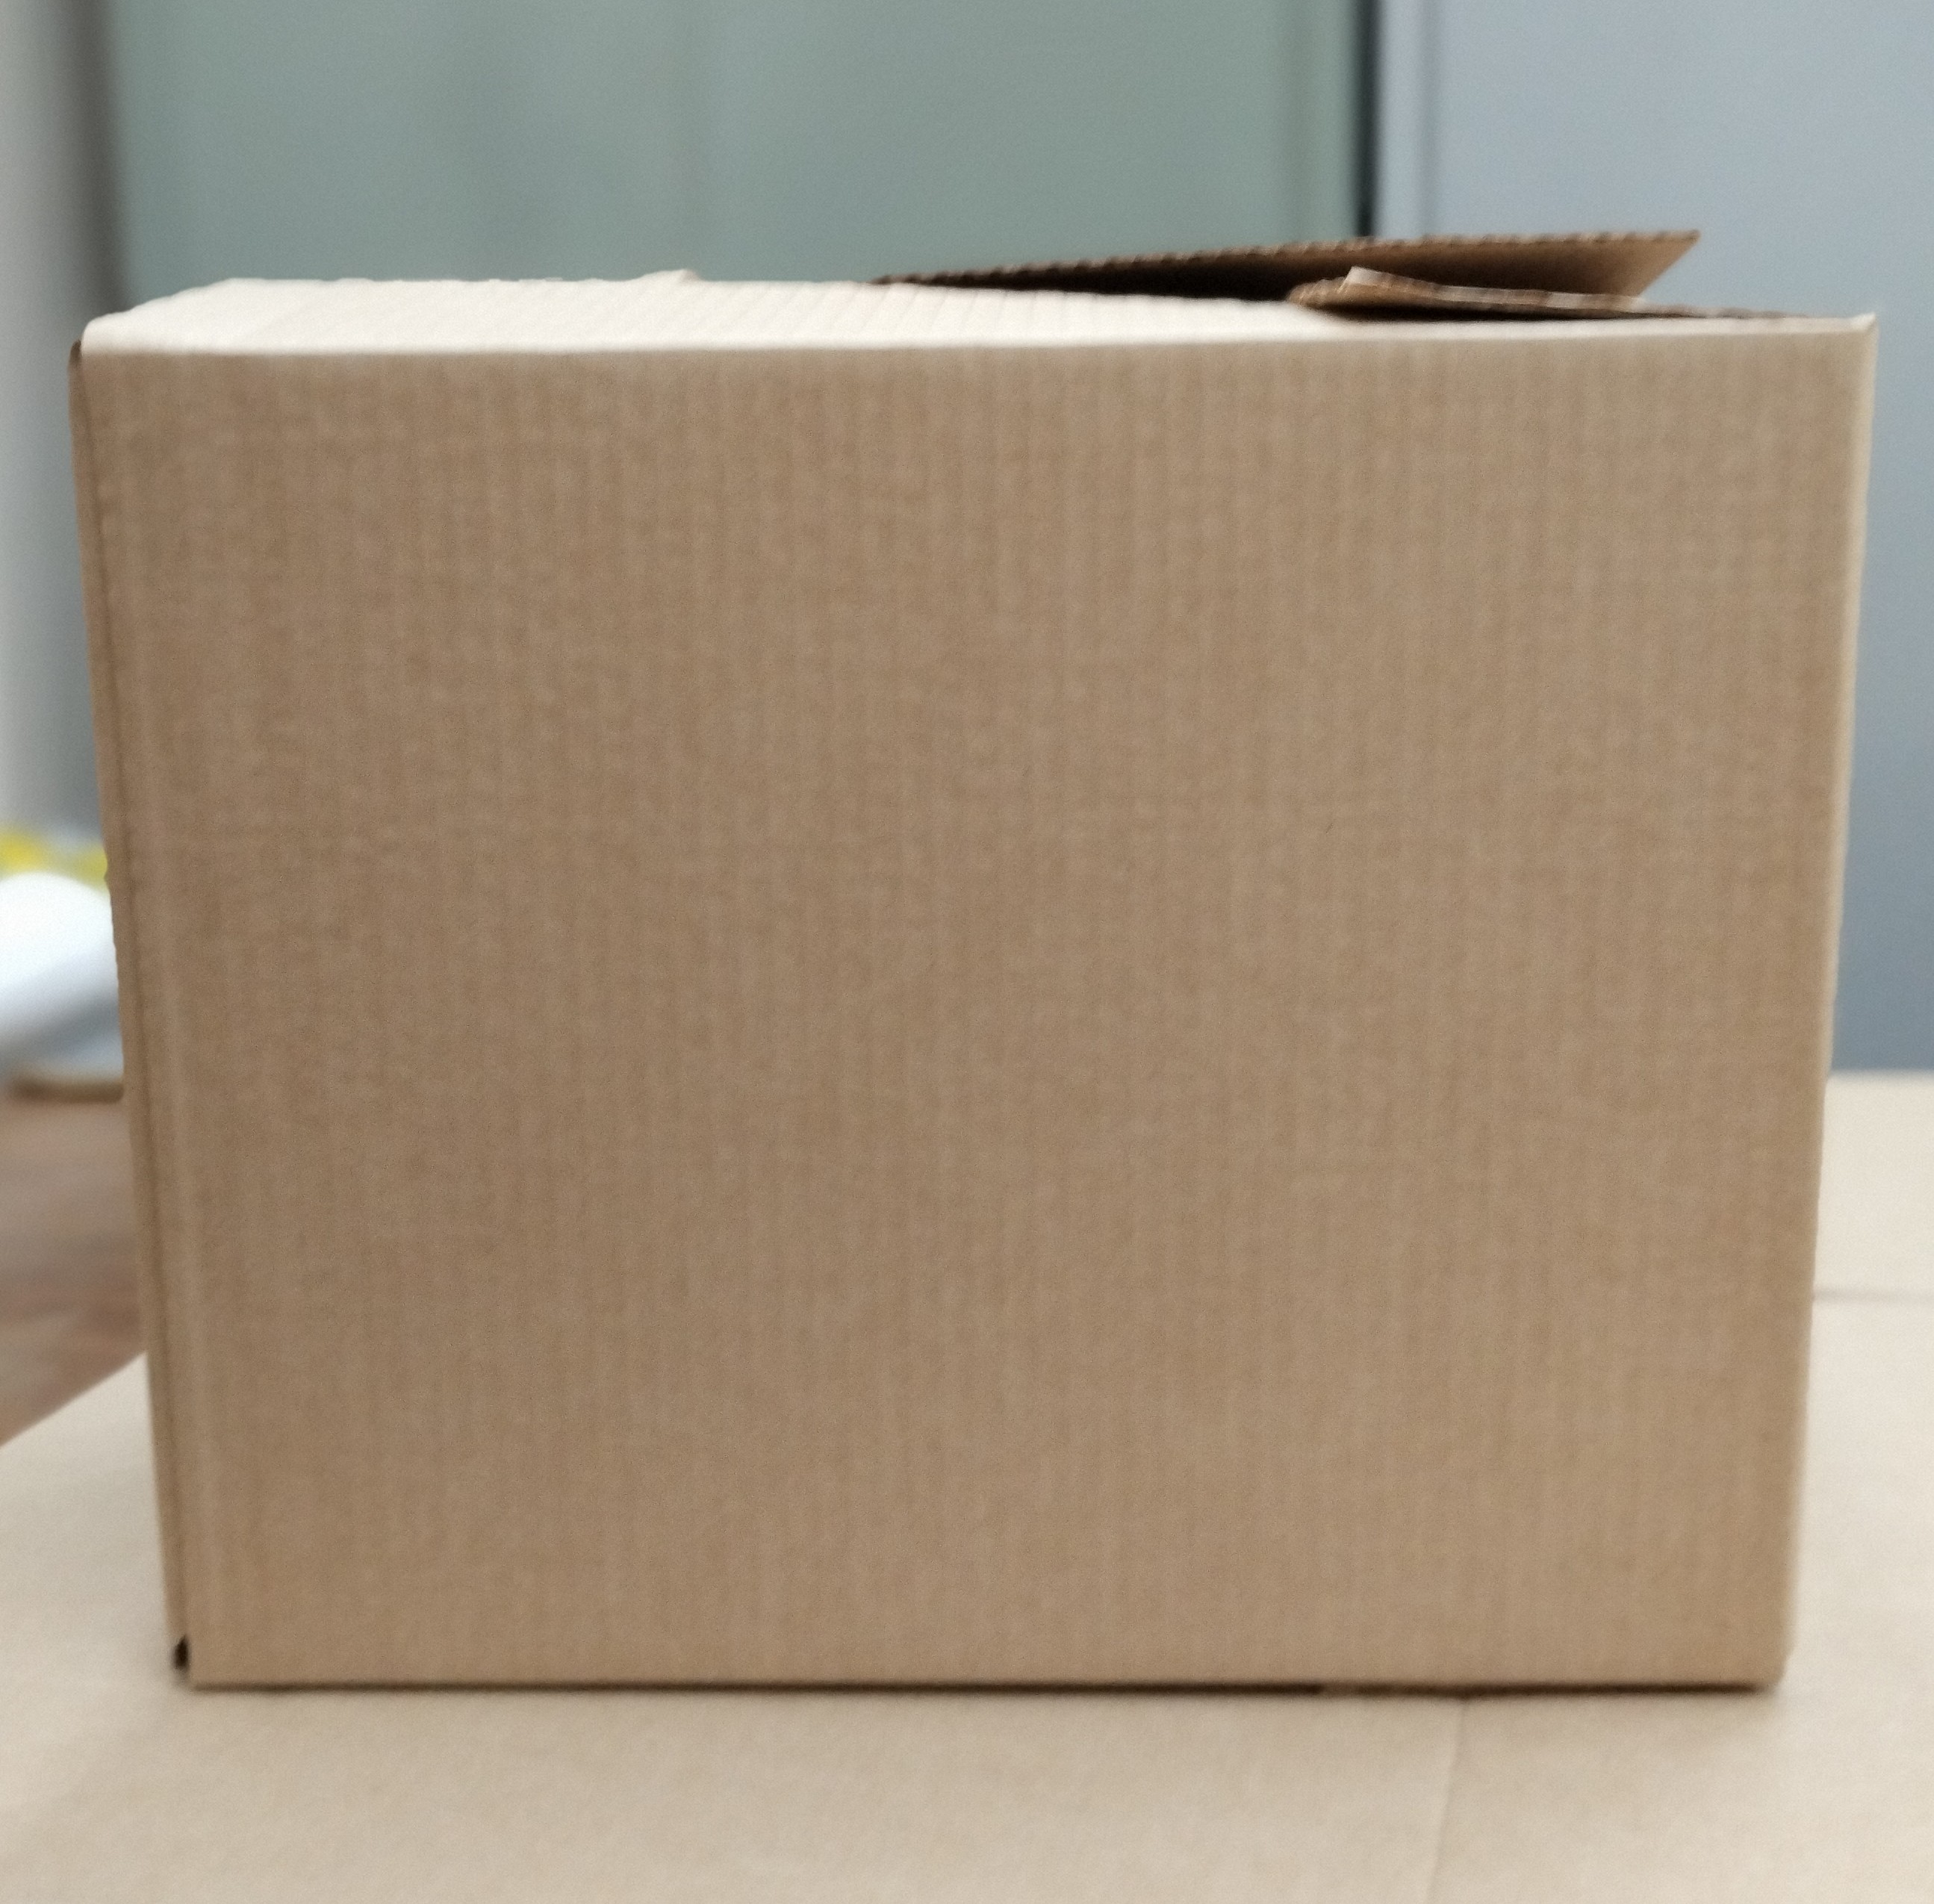 Caixa de papelao N12 - 19x33x27 ORSA I1211.2